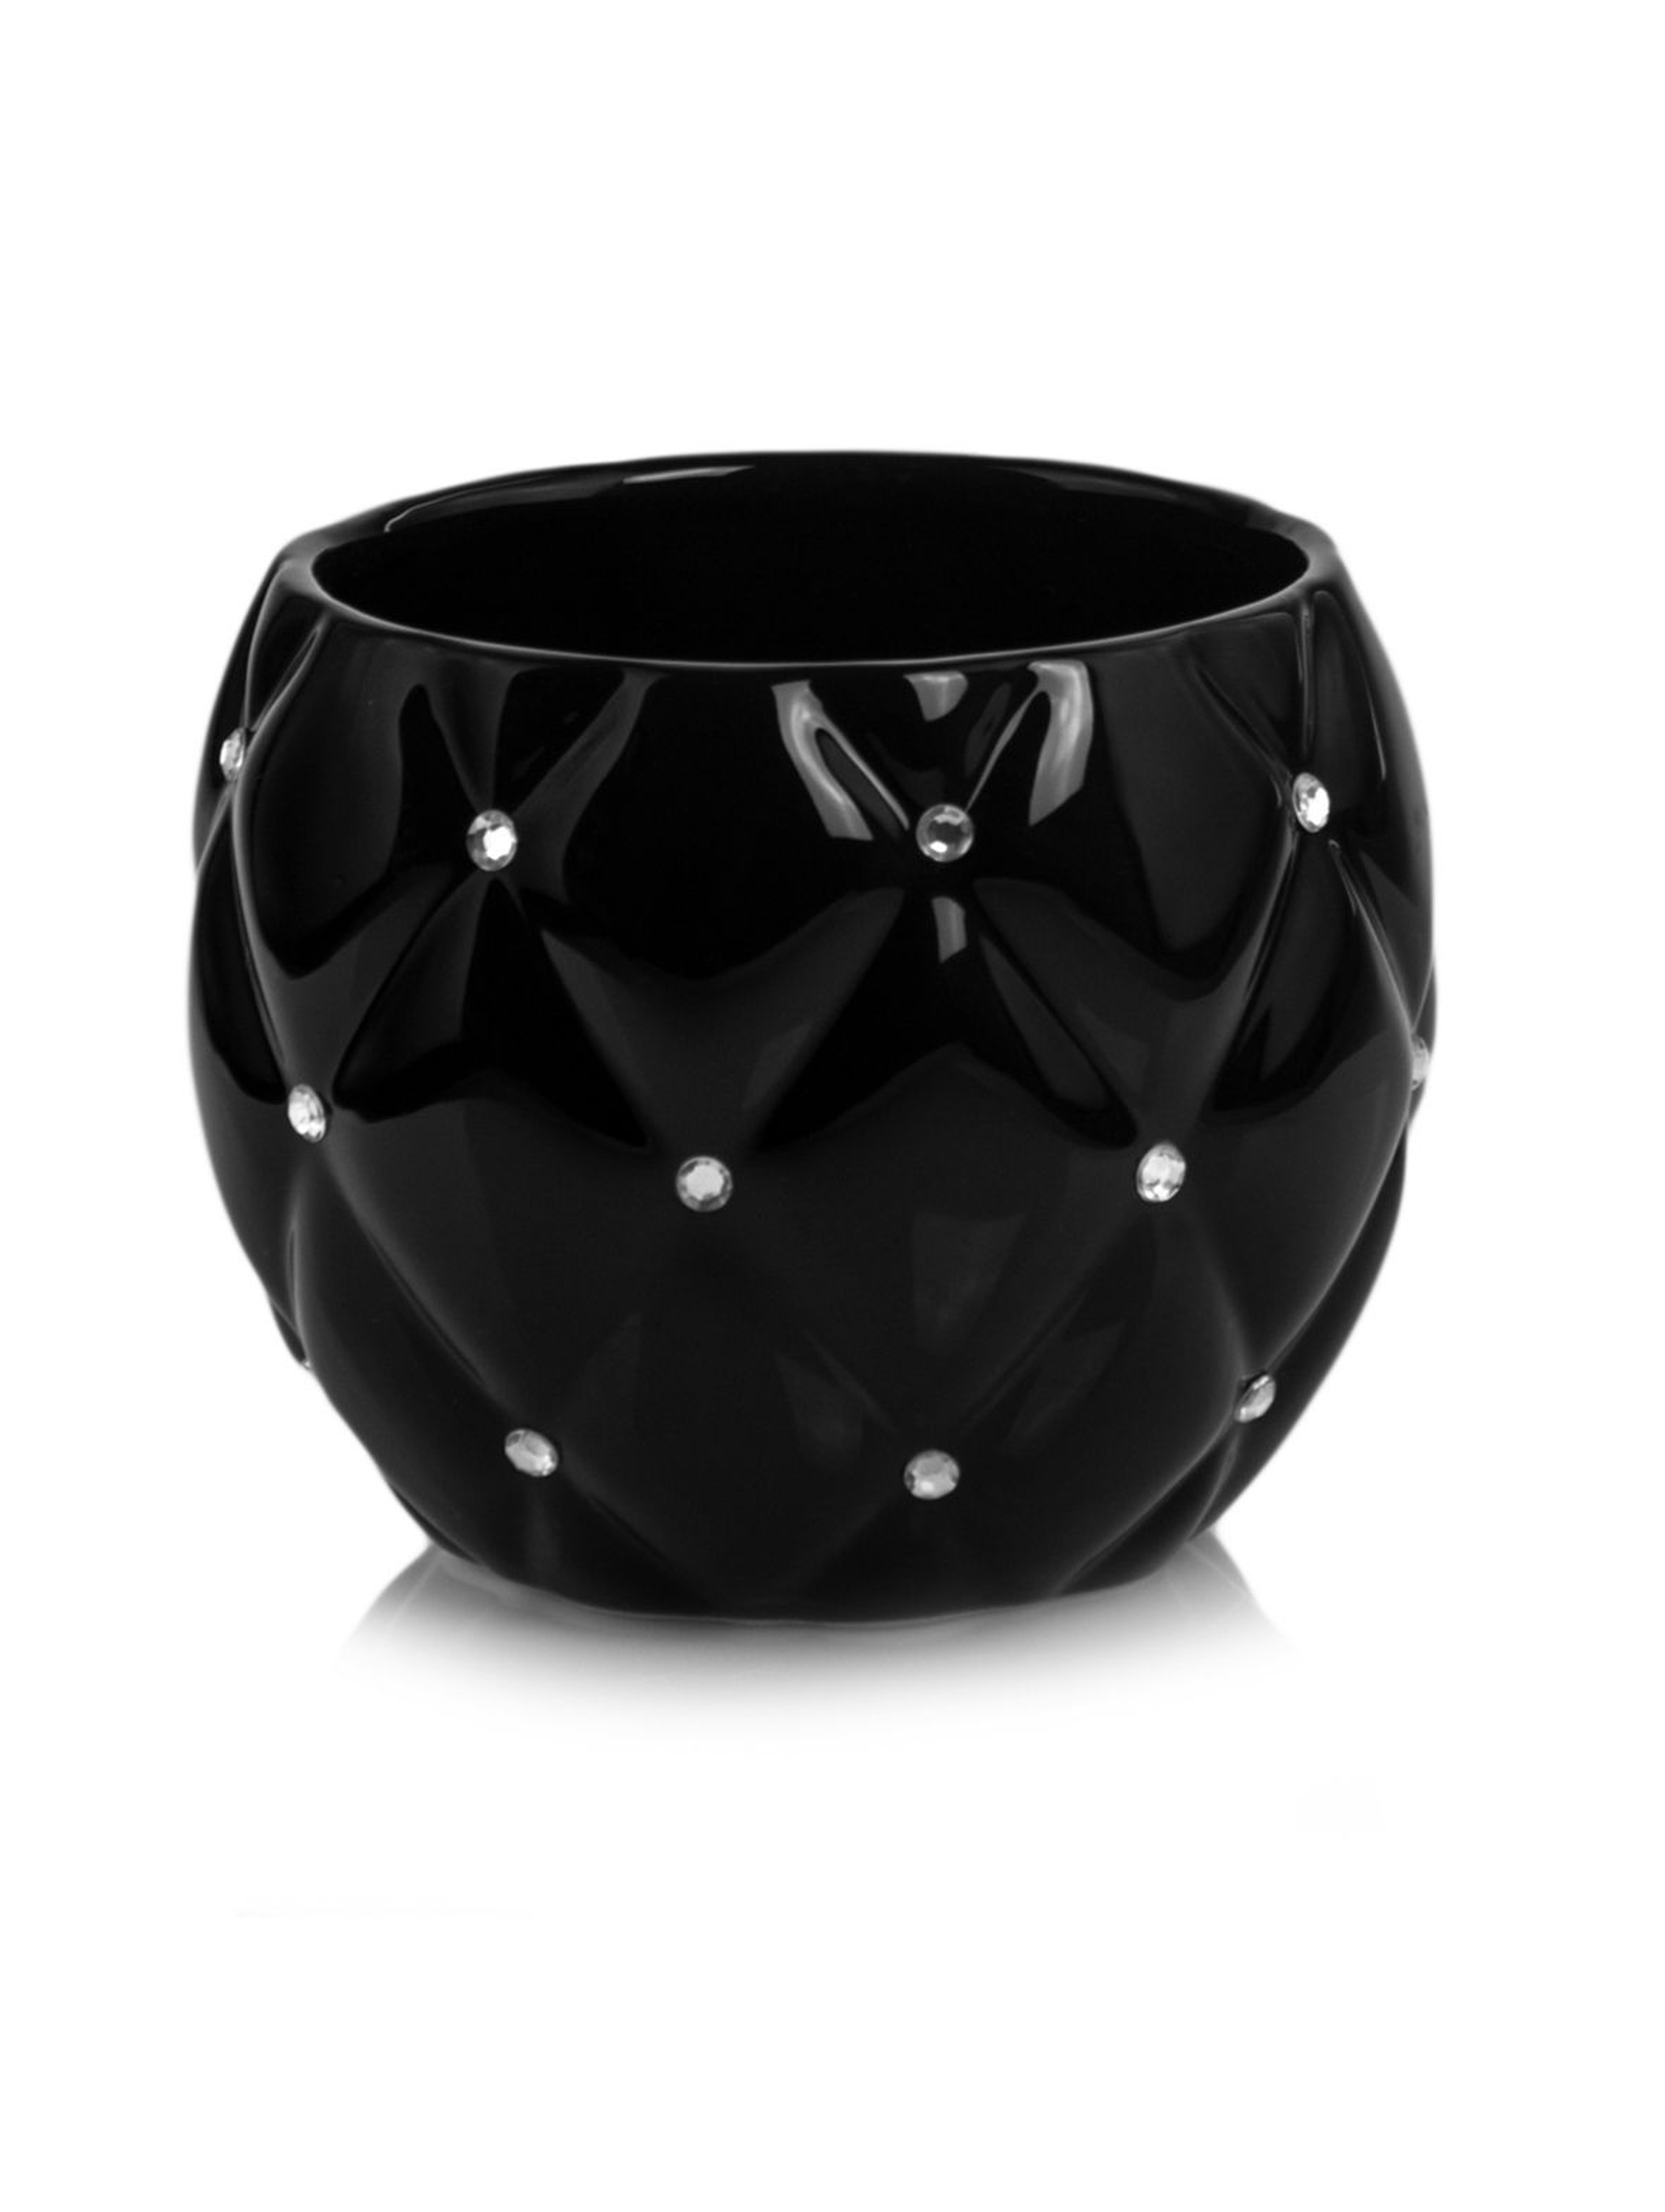 Donica ceramiczna zdobiona cekinami - czarna